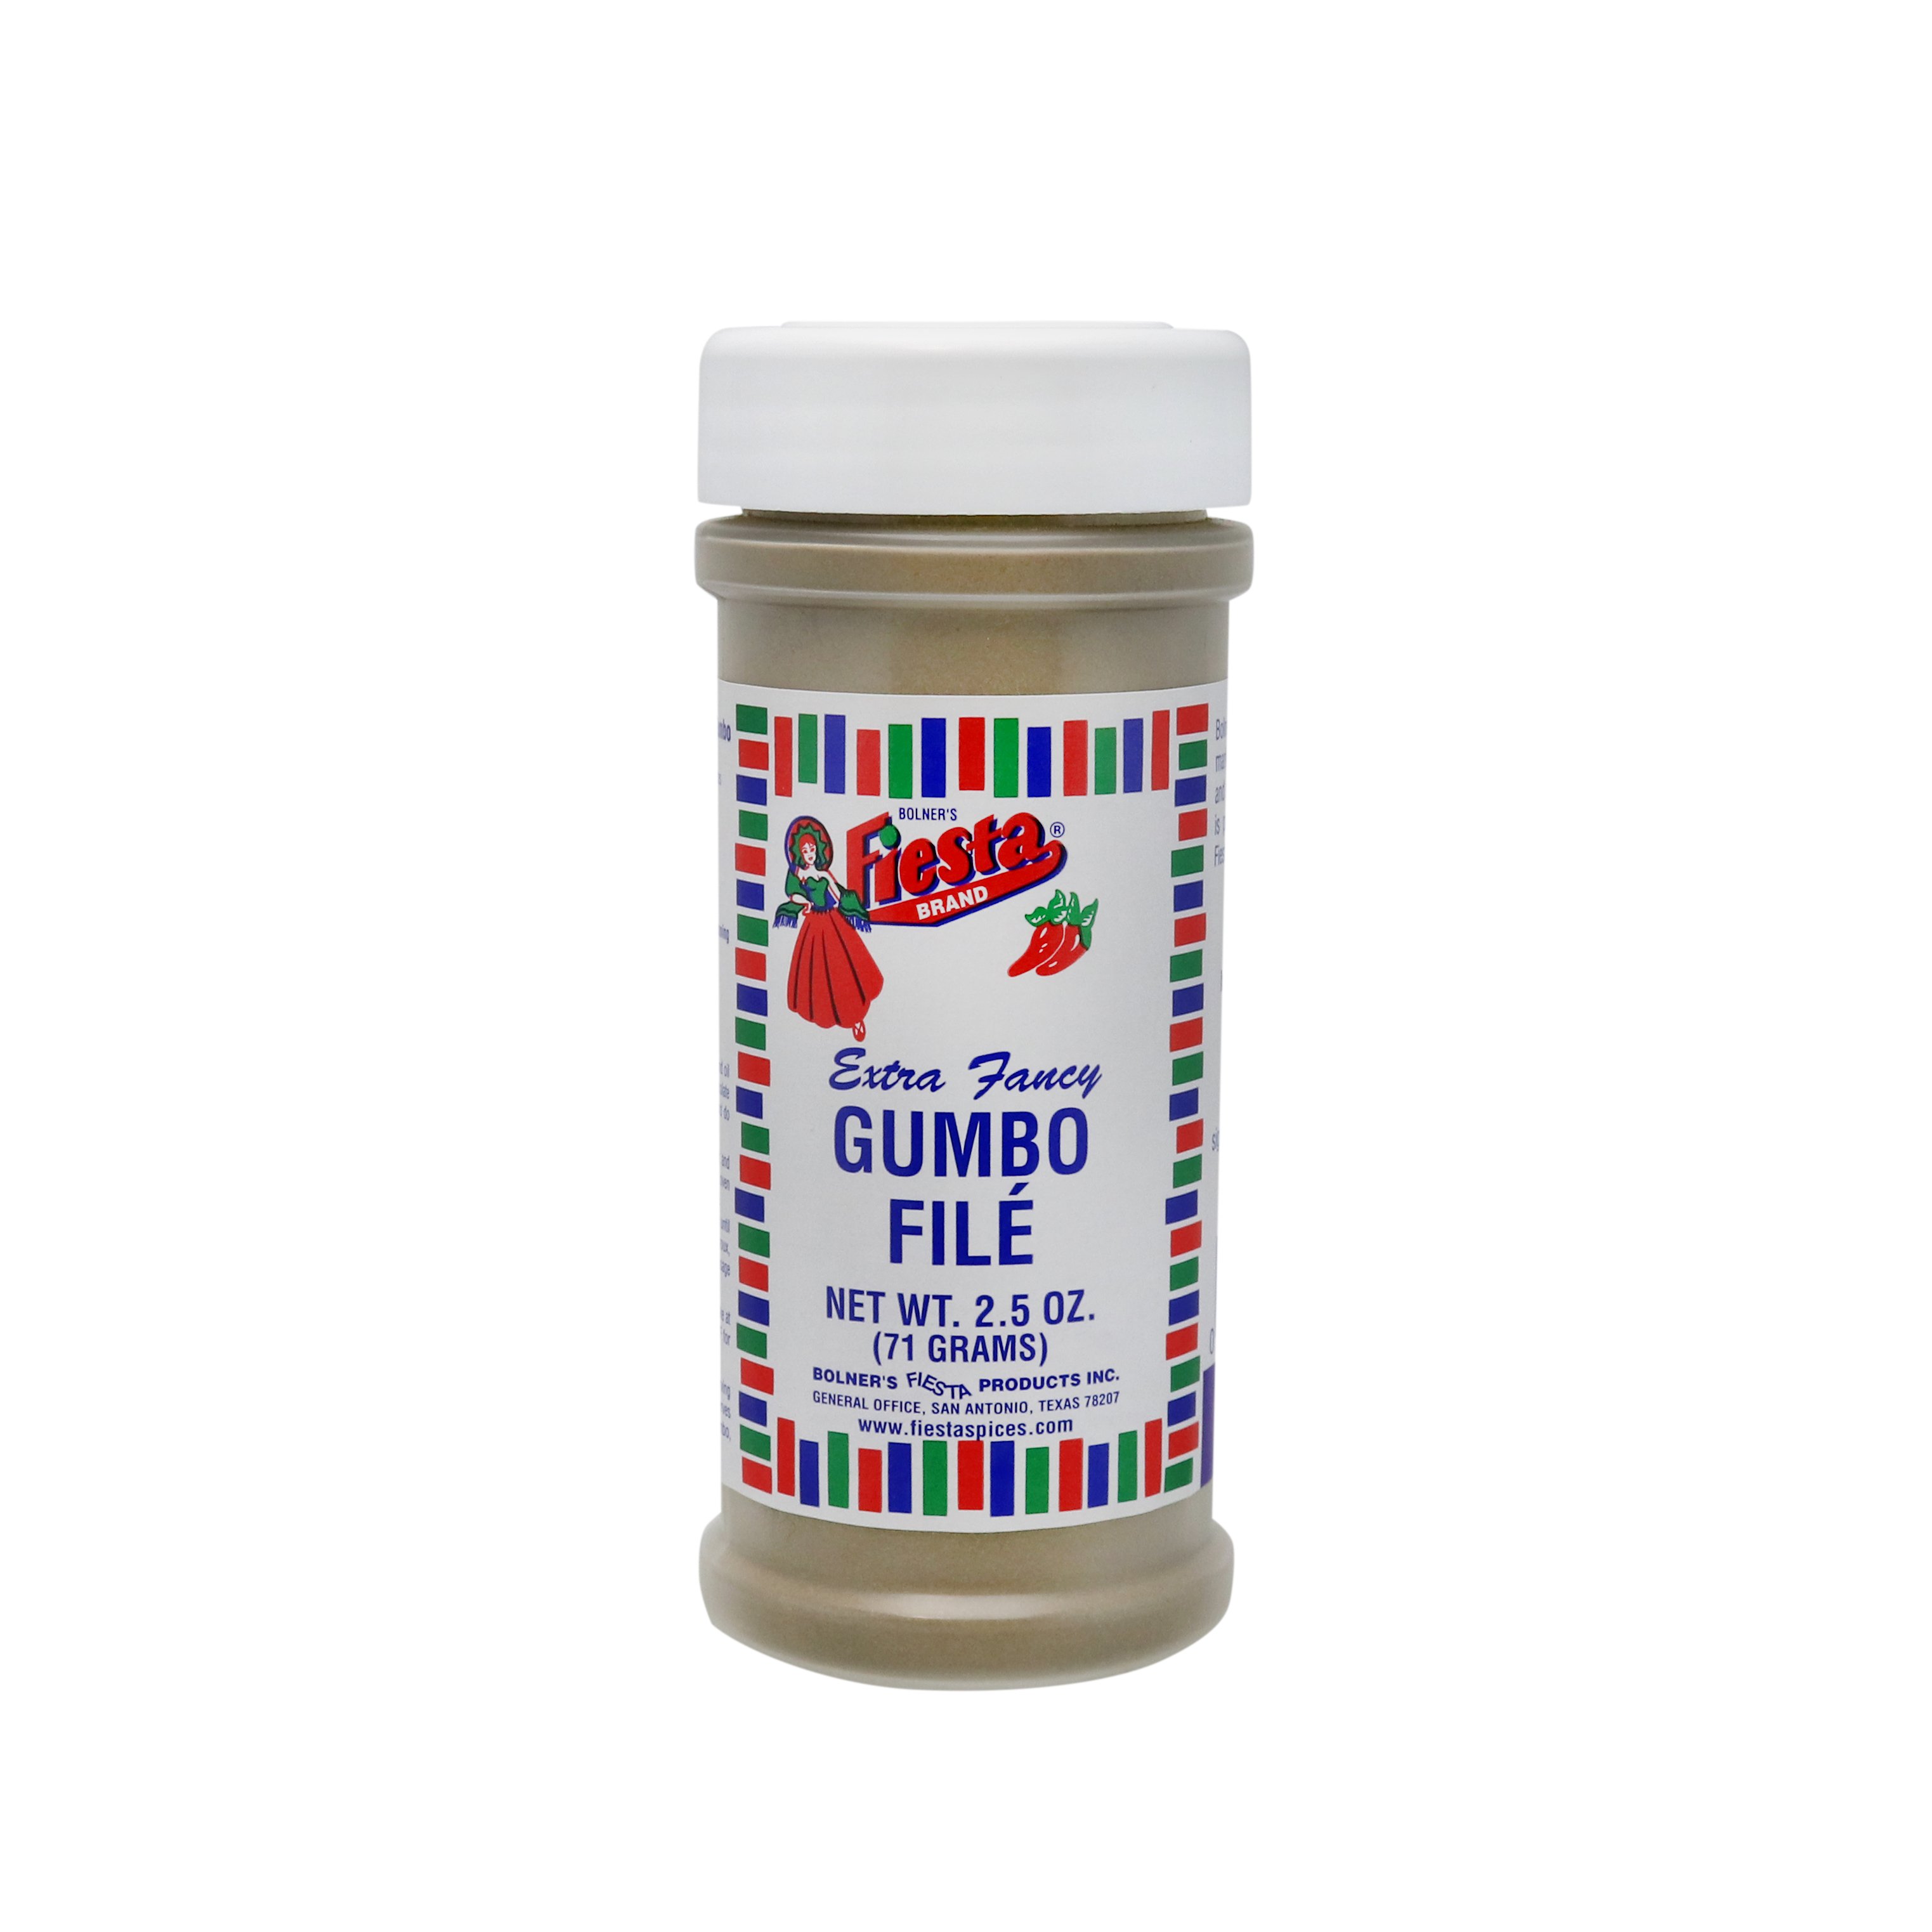 Bolner's Fiesta Gumbo File Seasoning - Shop Spice Mixes at H-E-B